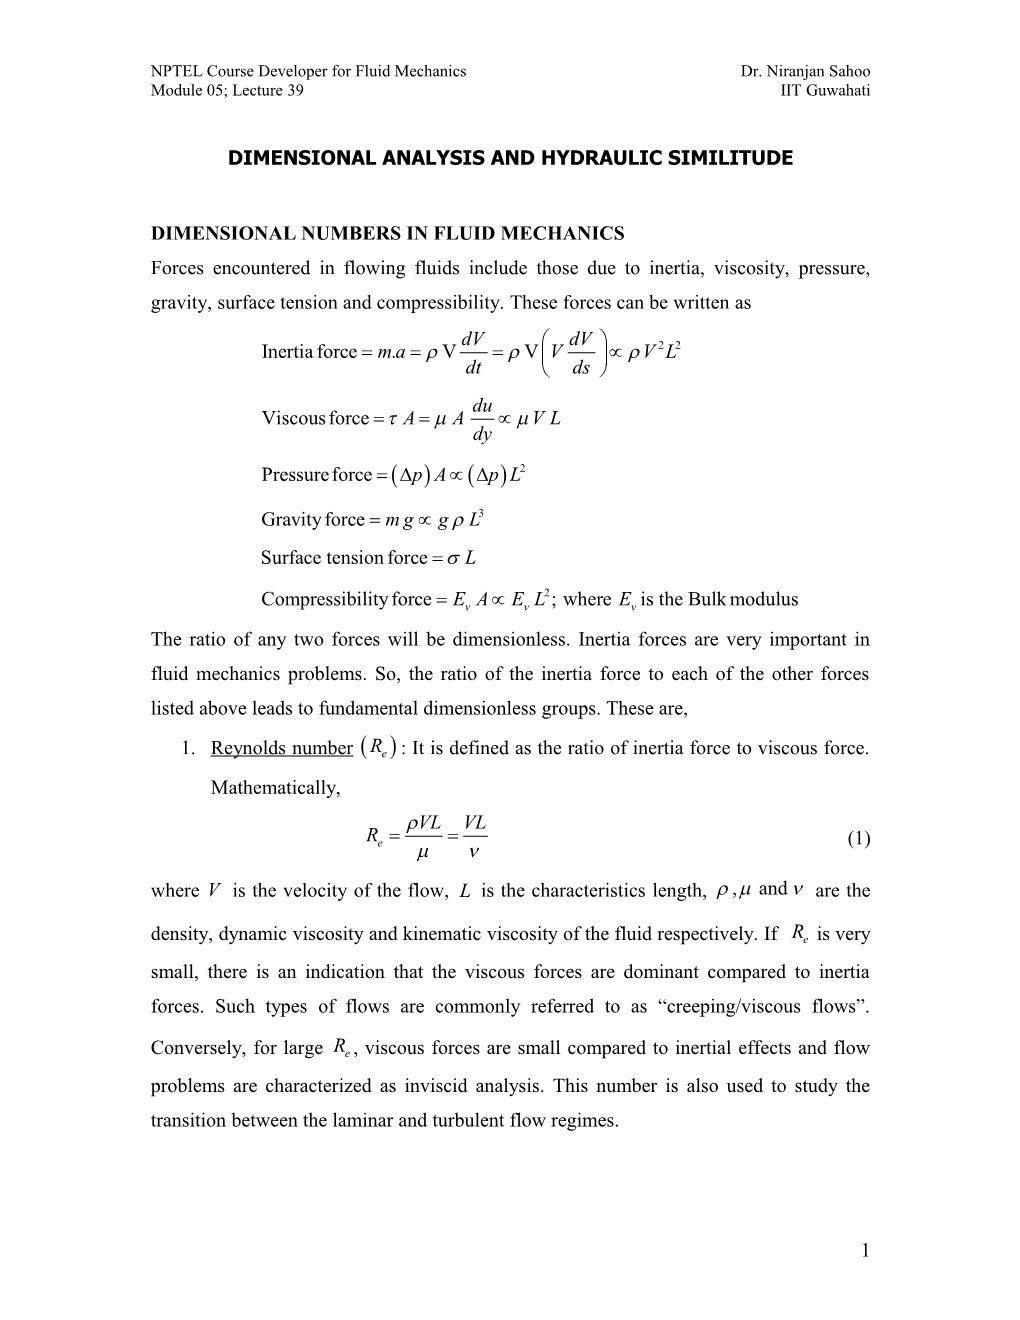 Dimensional Analysis and Hydraulic Similitude